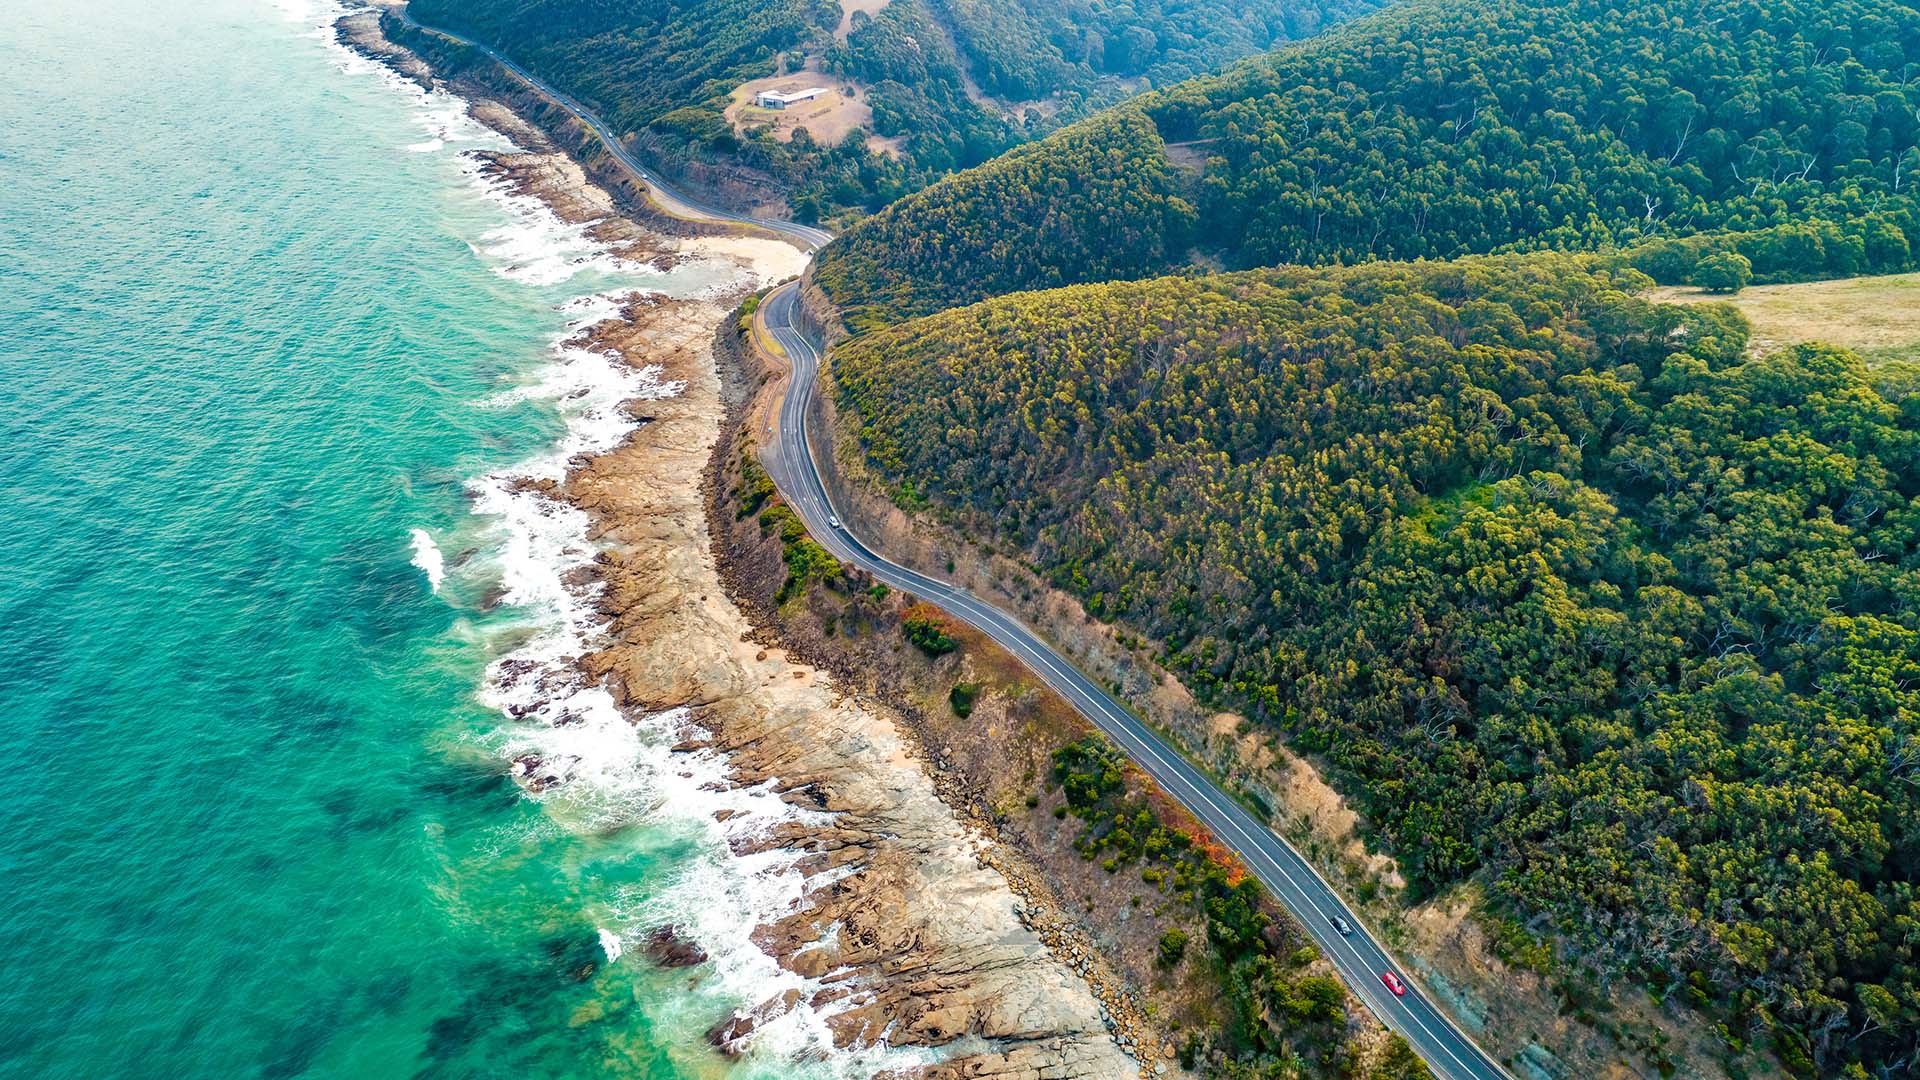 great ocean road along australia's coast